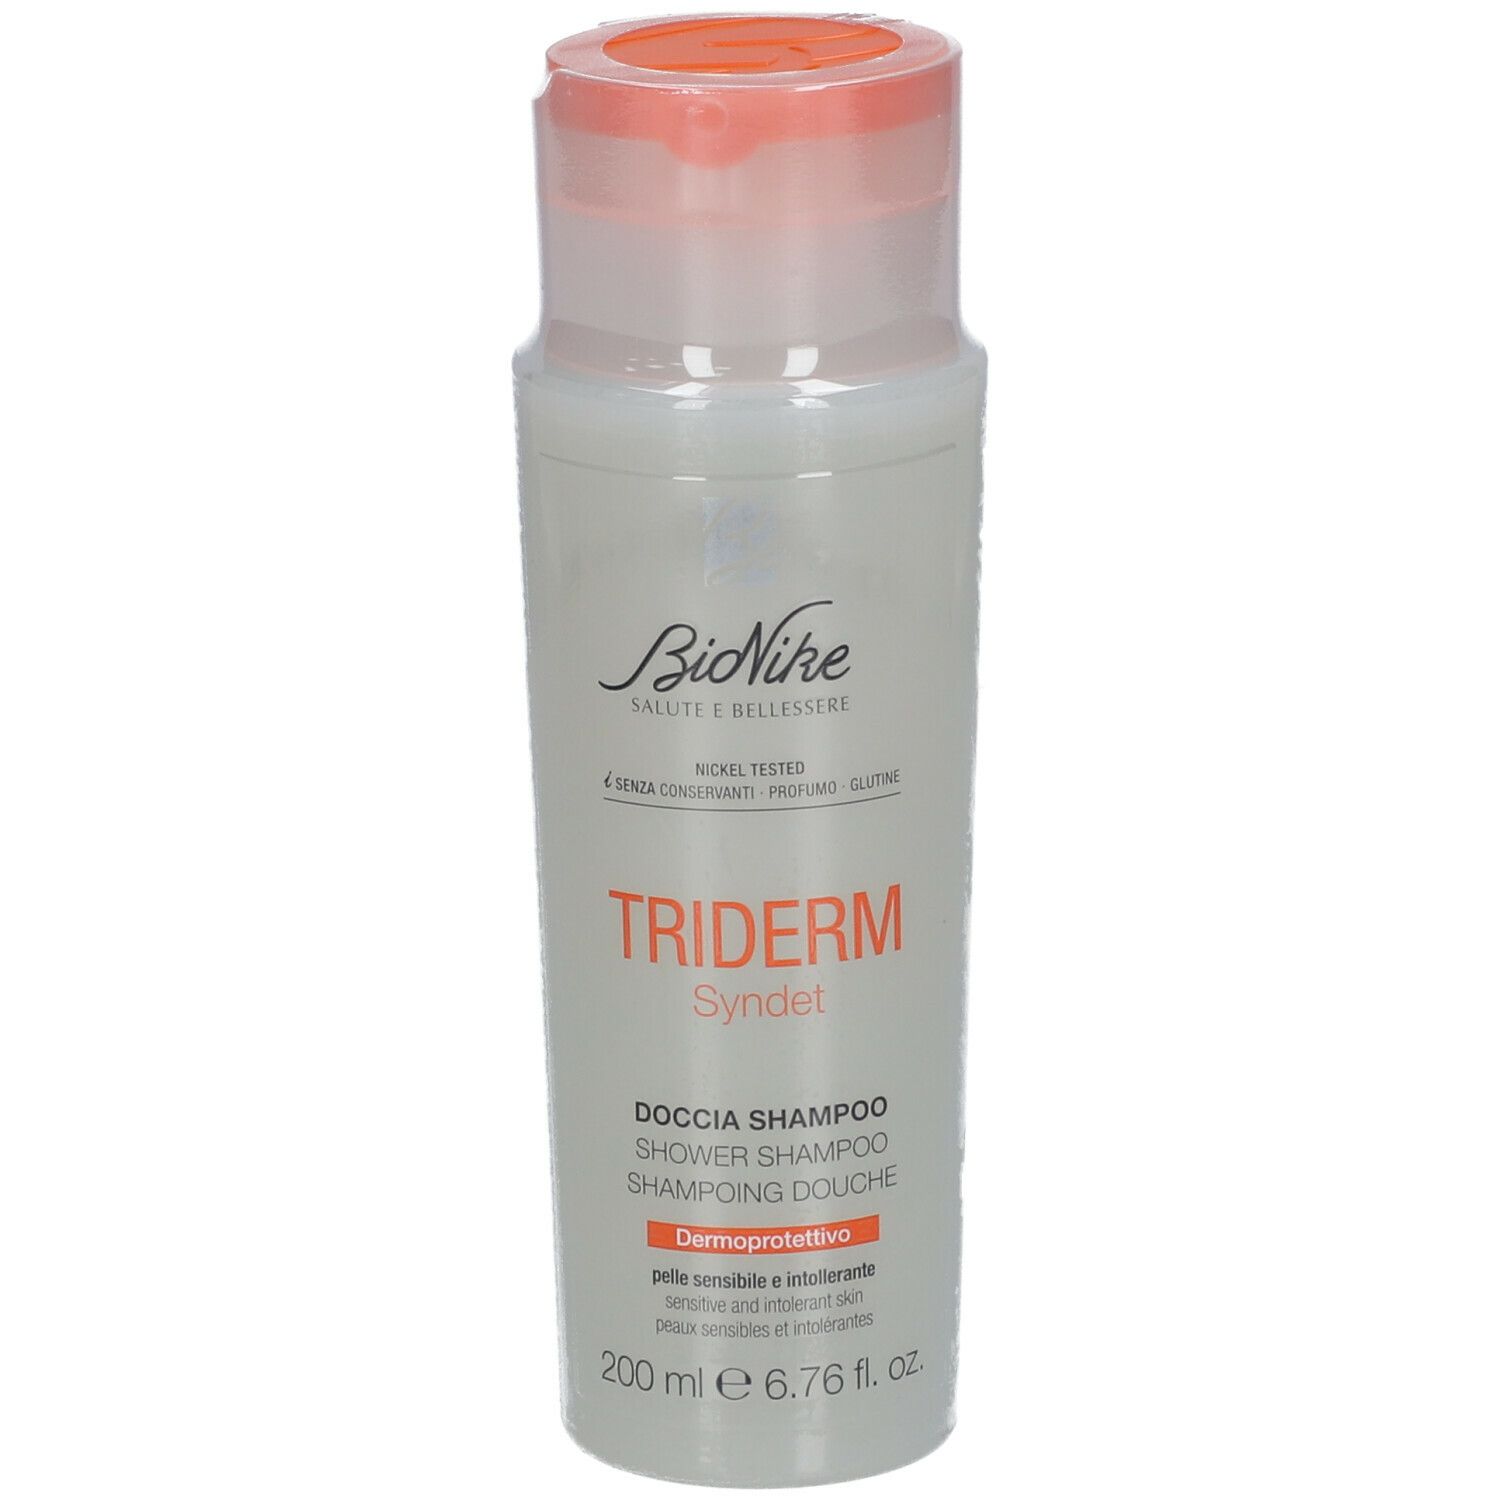 BioNike Triderm® Doccia shampoo